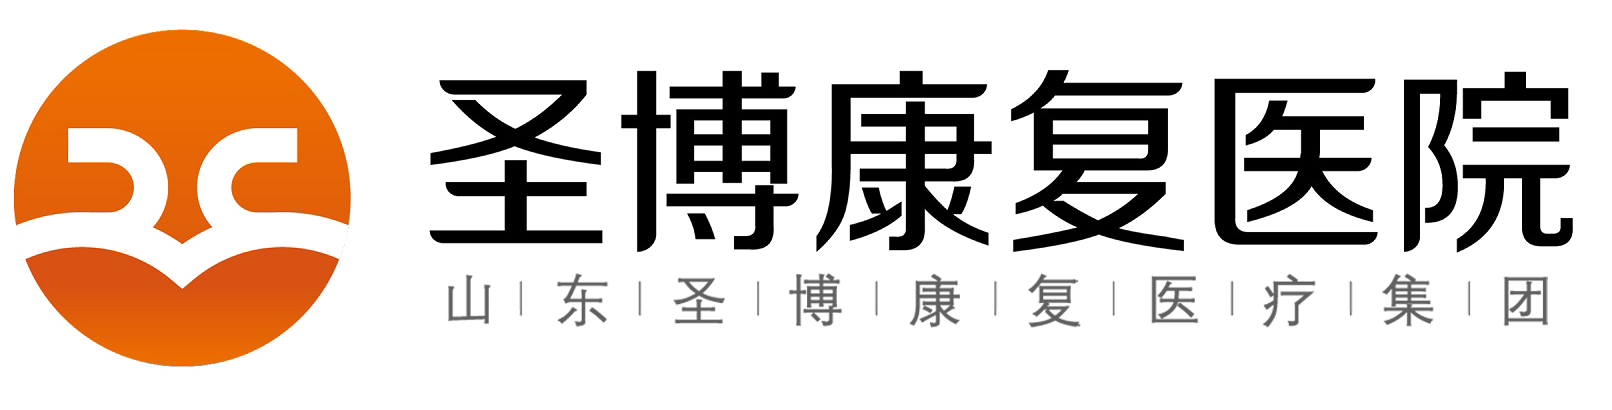 医院logo副本.png